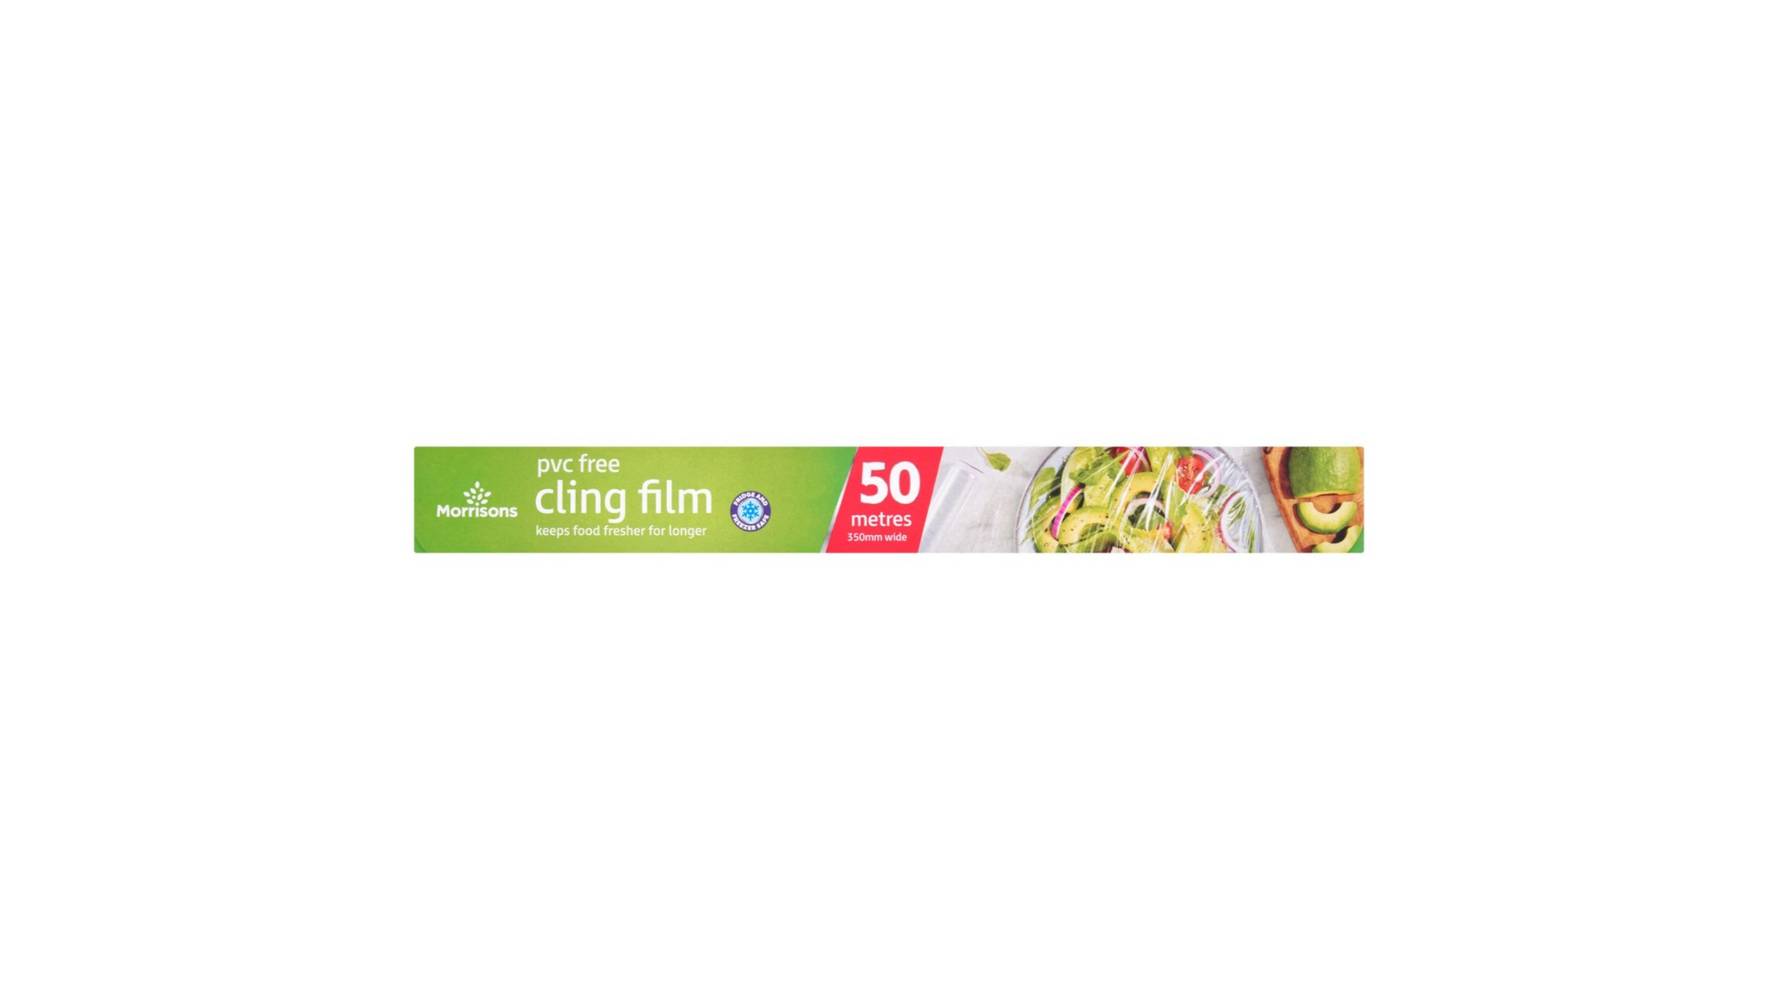 Morrisons Pvc Free Cling Film (50m x 350mm)